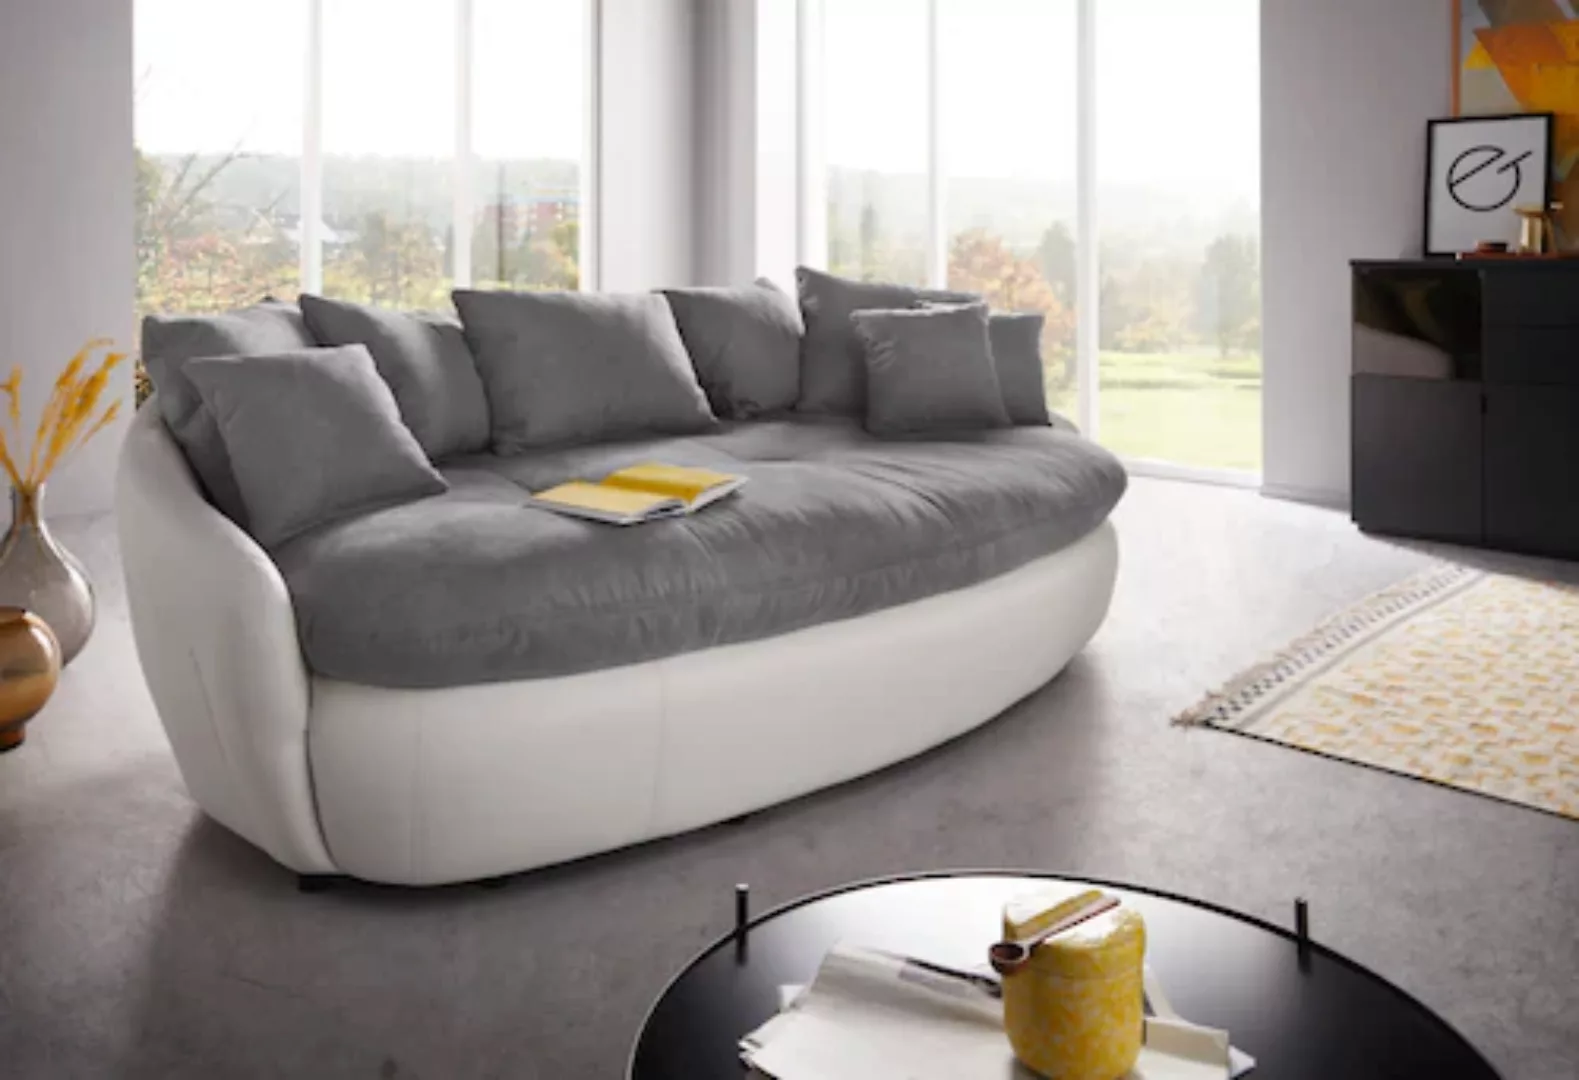 INOSIGN Big-Sofa "Aruba" günstig online kaufen